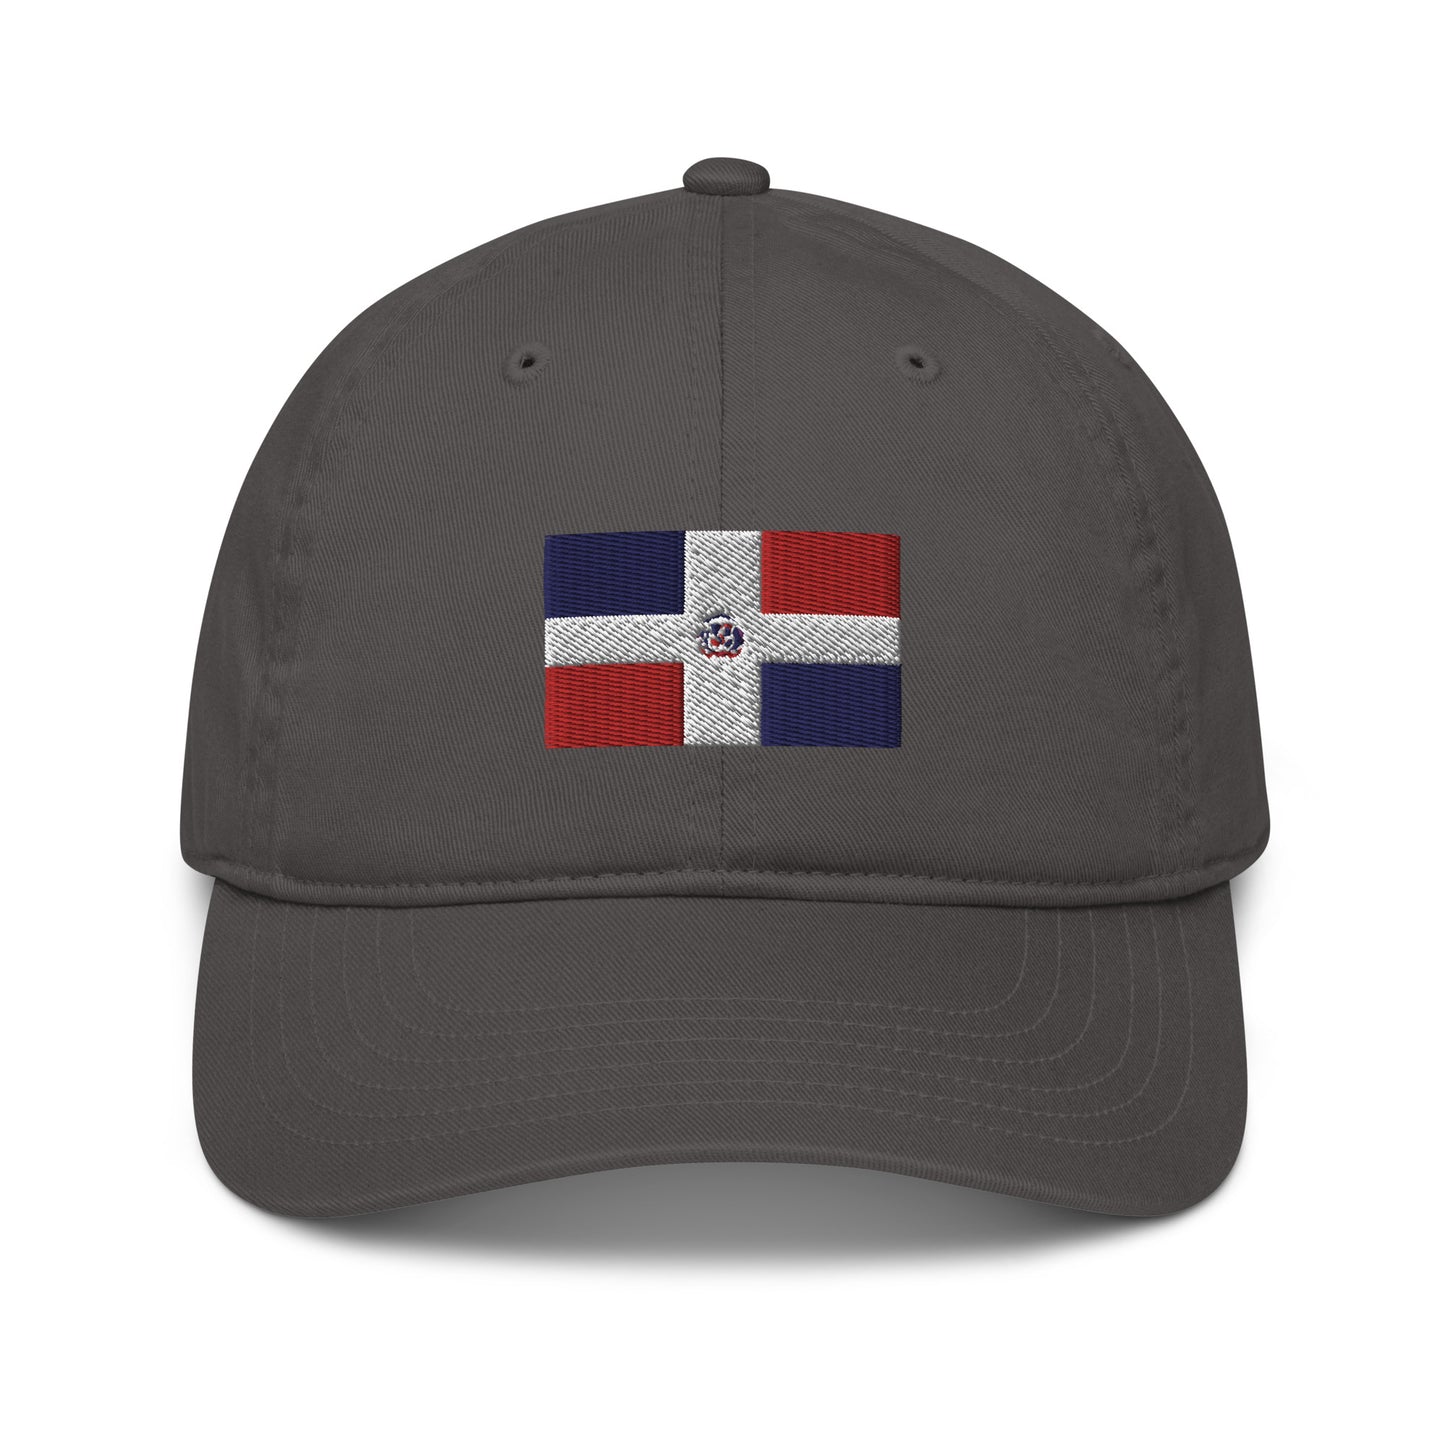 Dominican Republic Flag Cap